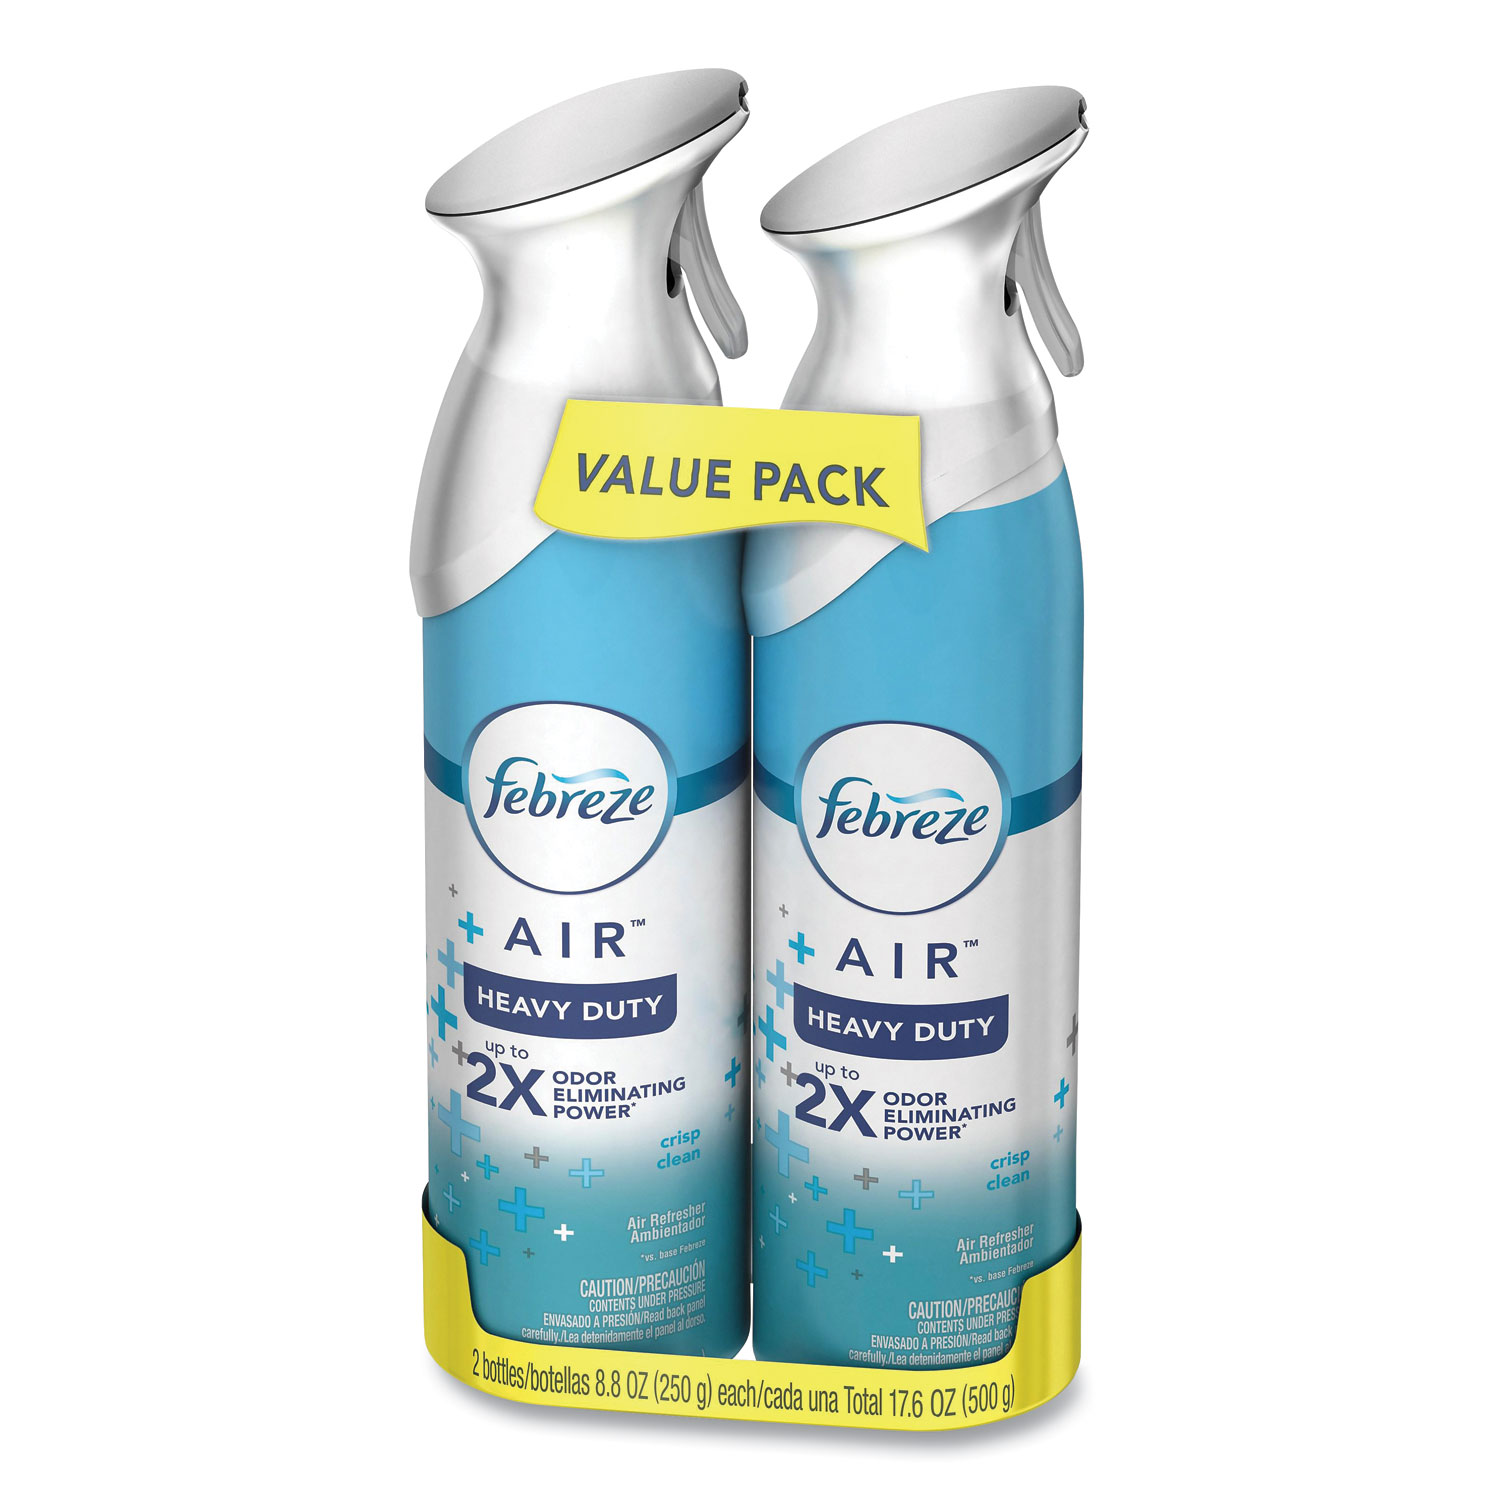  Febreze Car Odor-Eliminating Air Freshener, Downy April Fresh  scent, 2 count (Pack of 4) : Everything Else